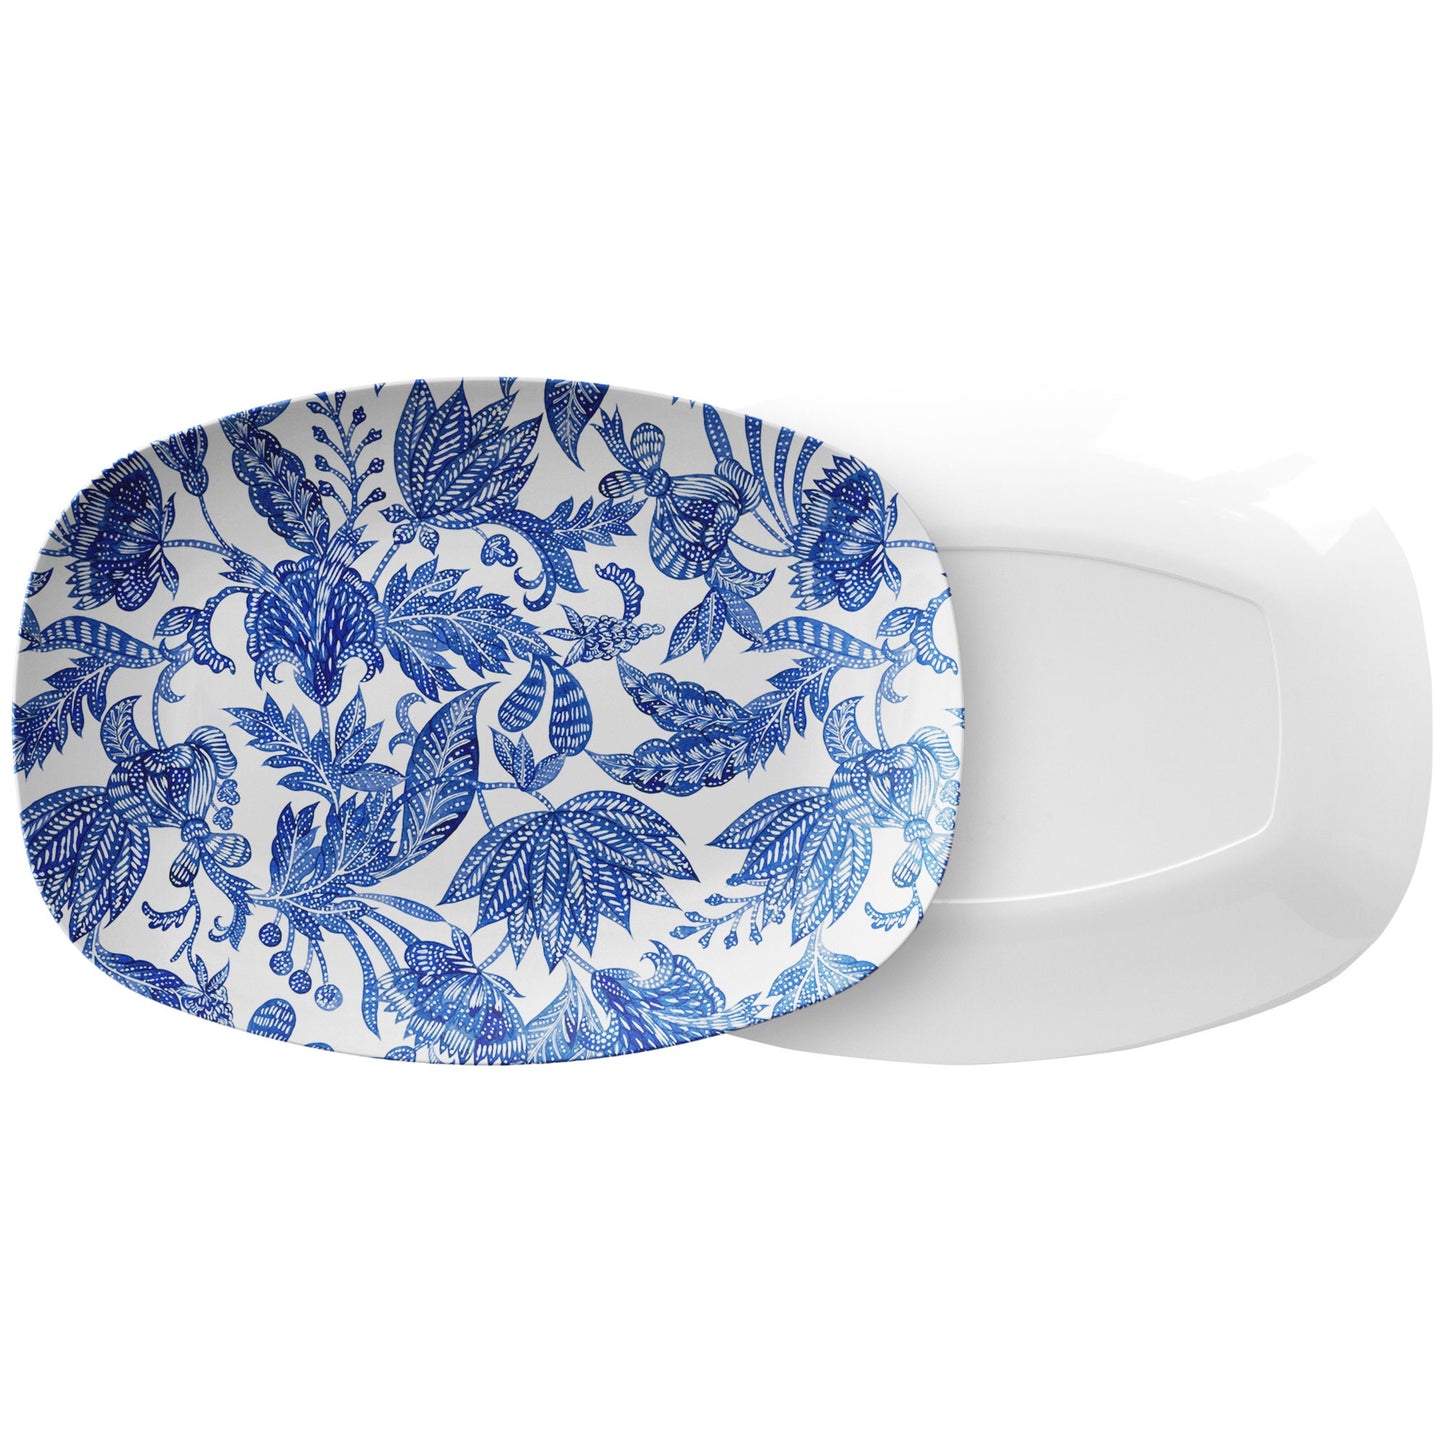 Floral Batik Serving Platter, Blue and White, Luxury Thermosaf Plastic